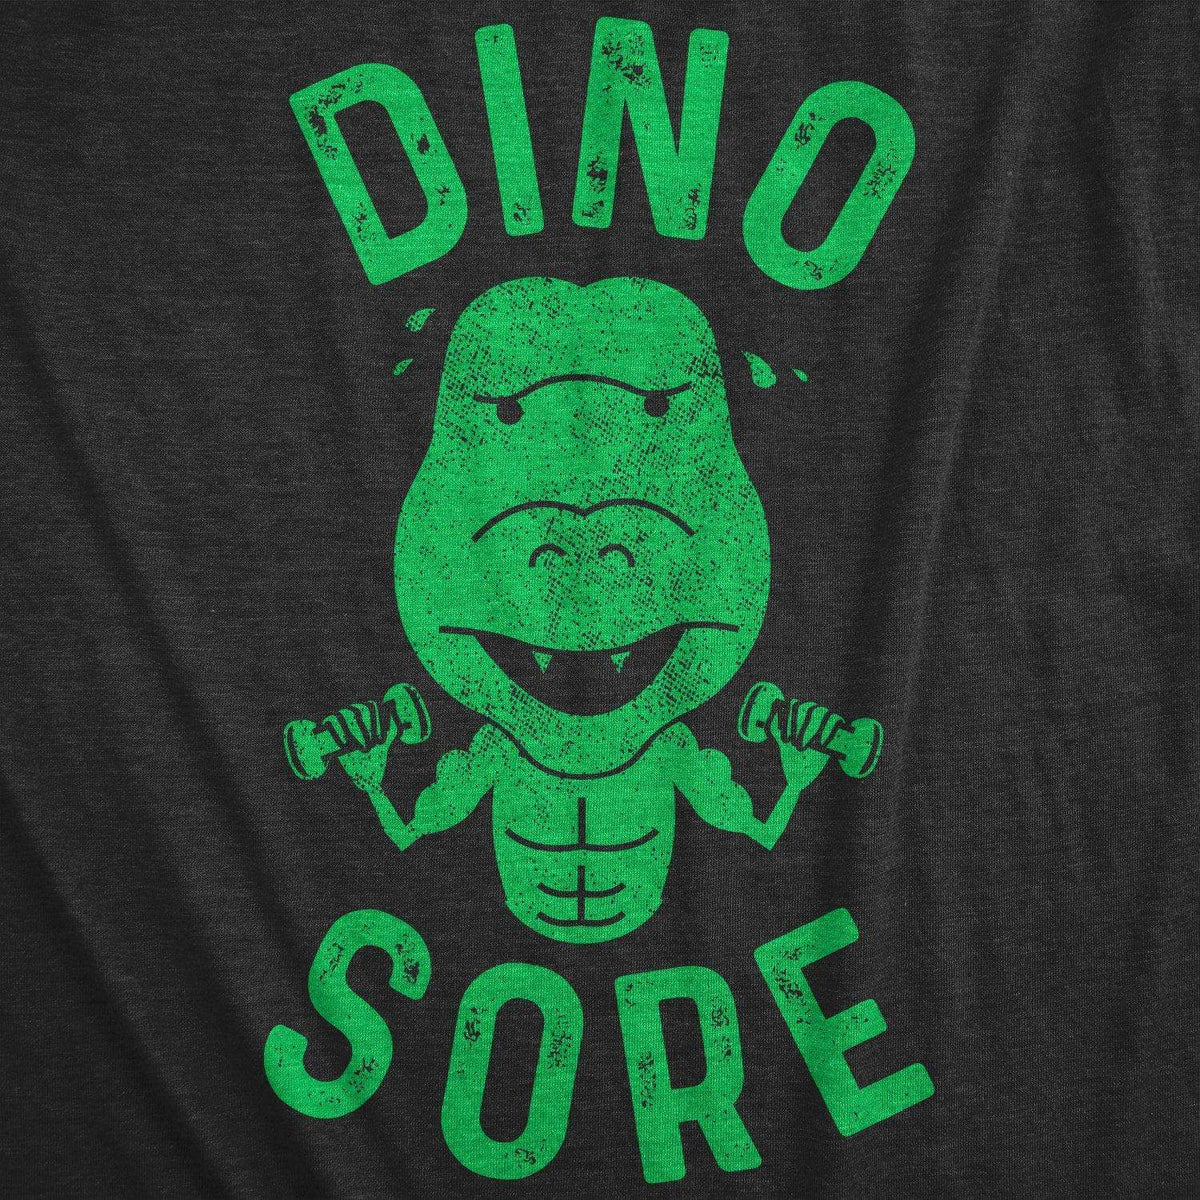 Dino Sore Men&#39;s Tshirt - Crazy Dog T-Shirts